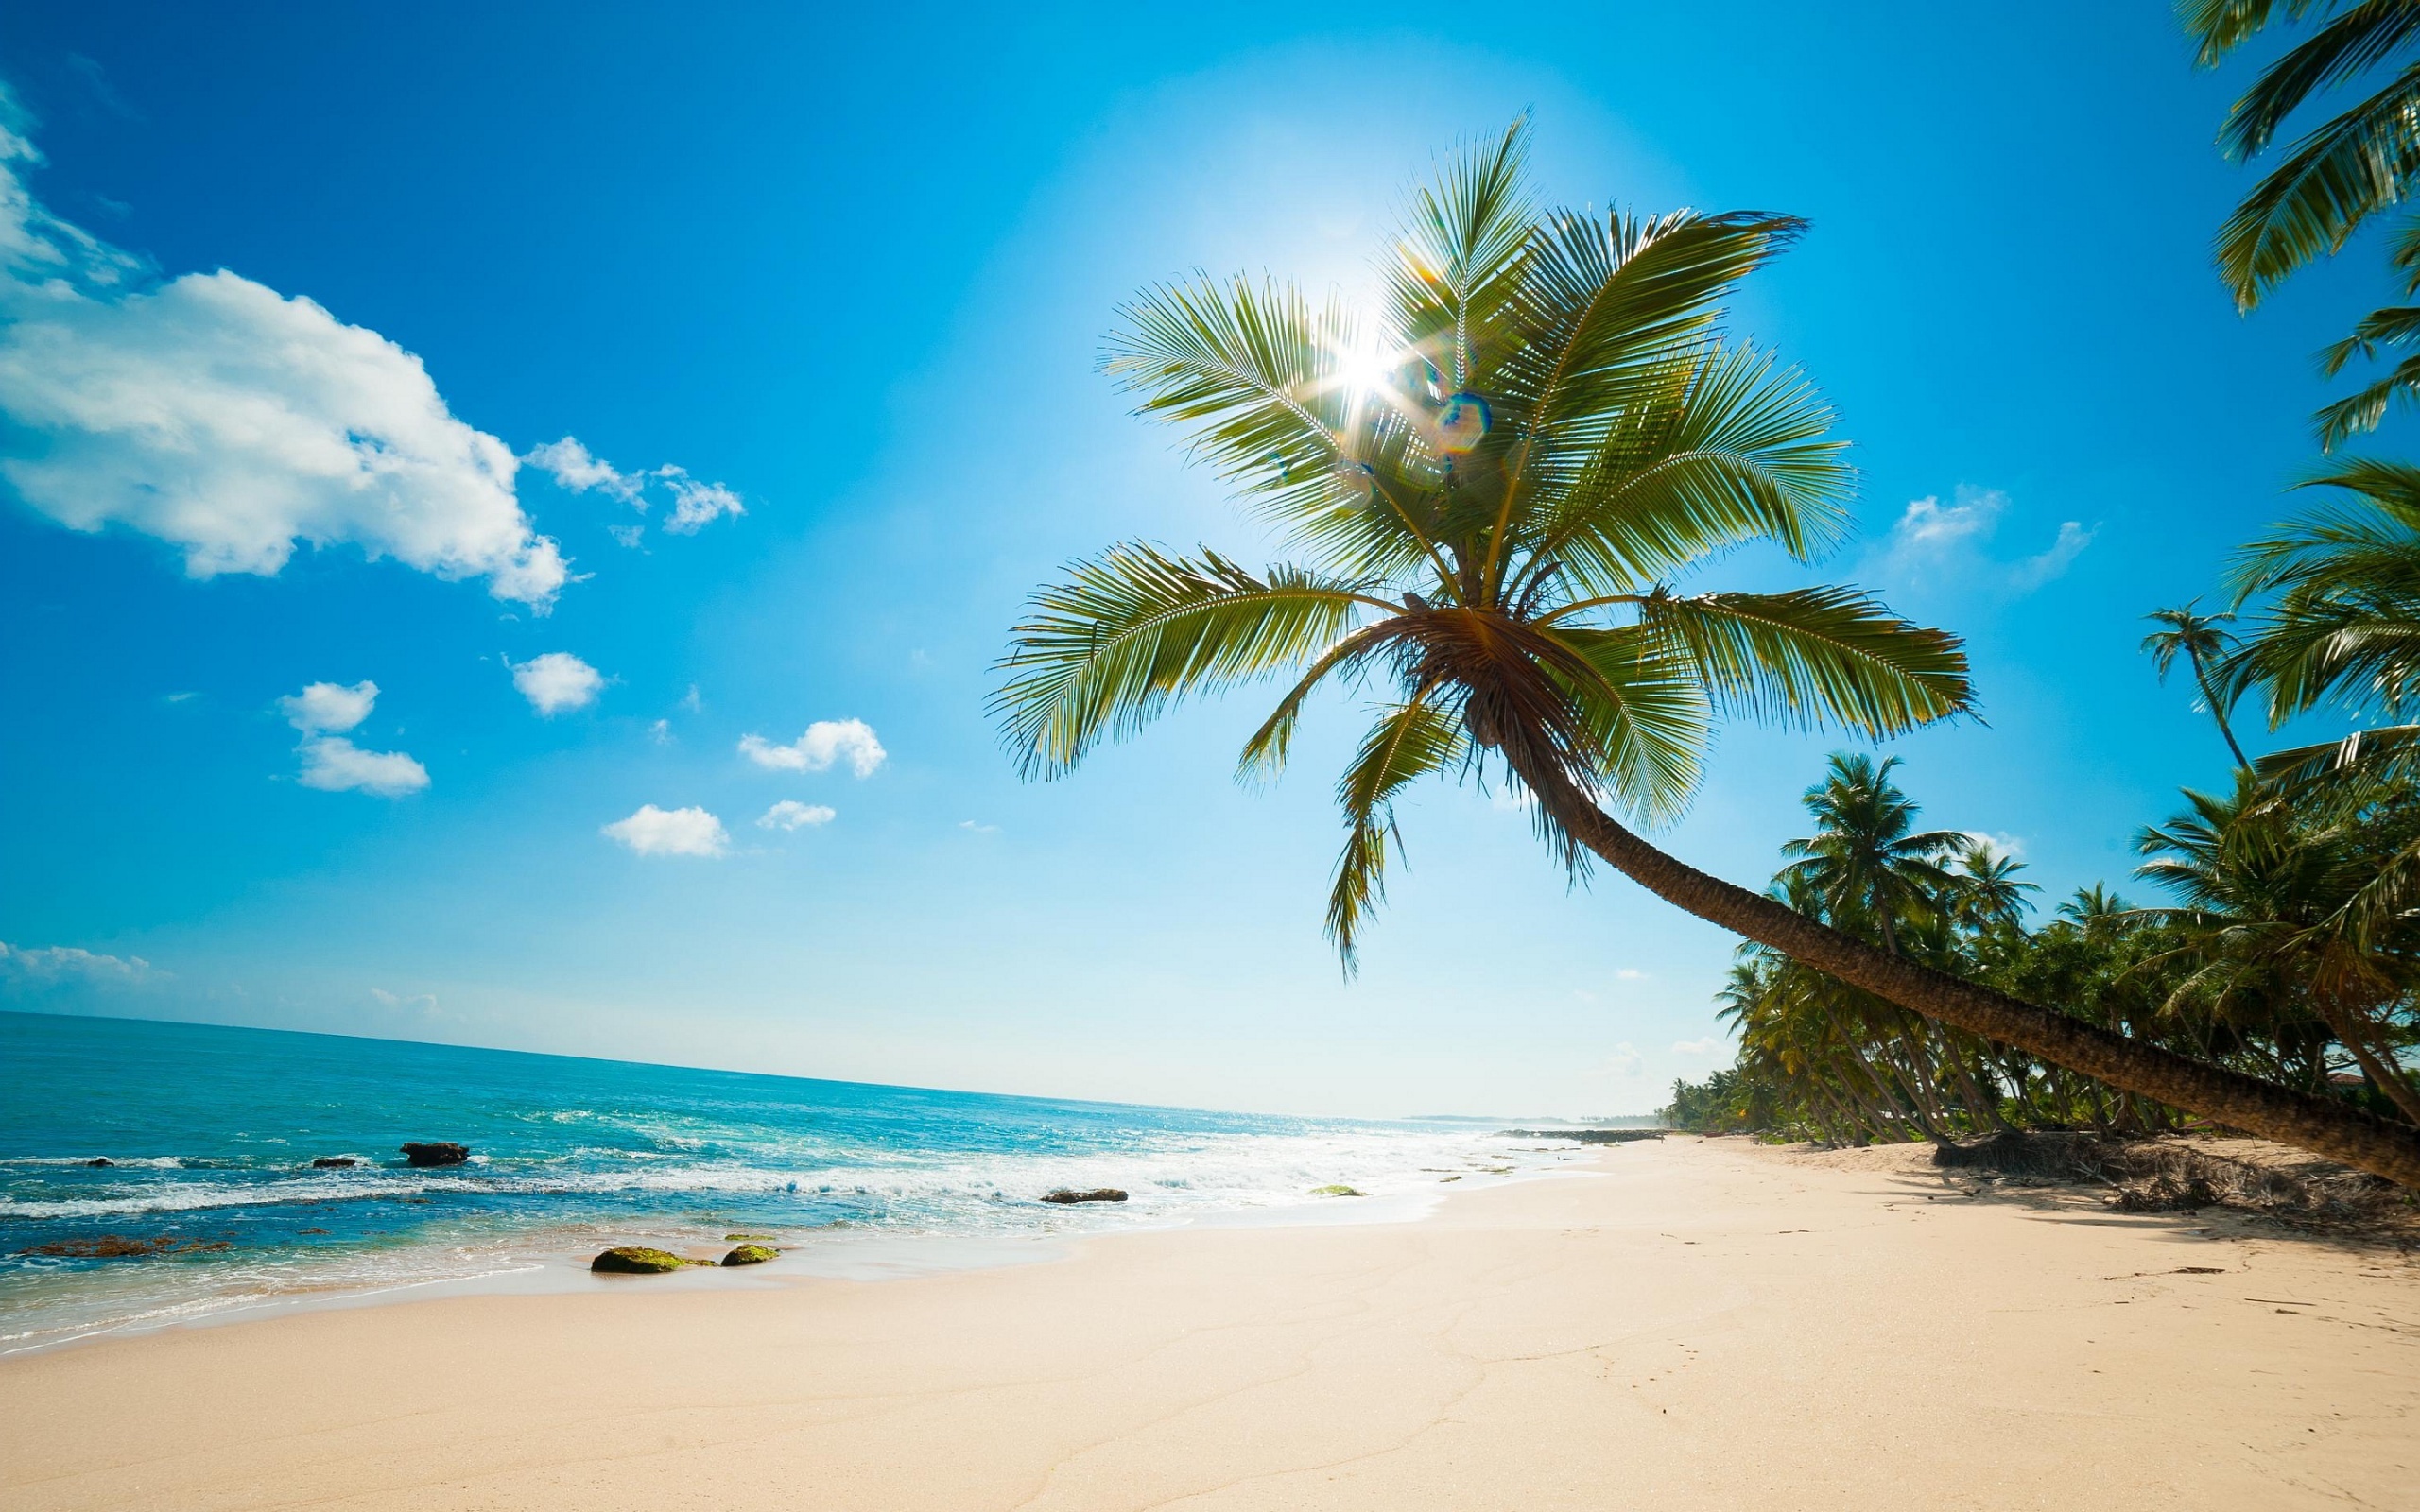 Beach Coconut Tree 20463 #6983270